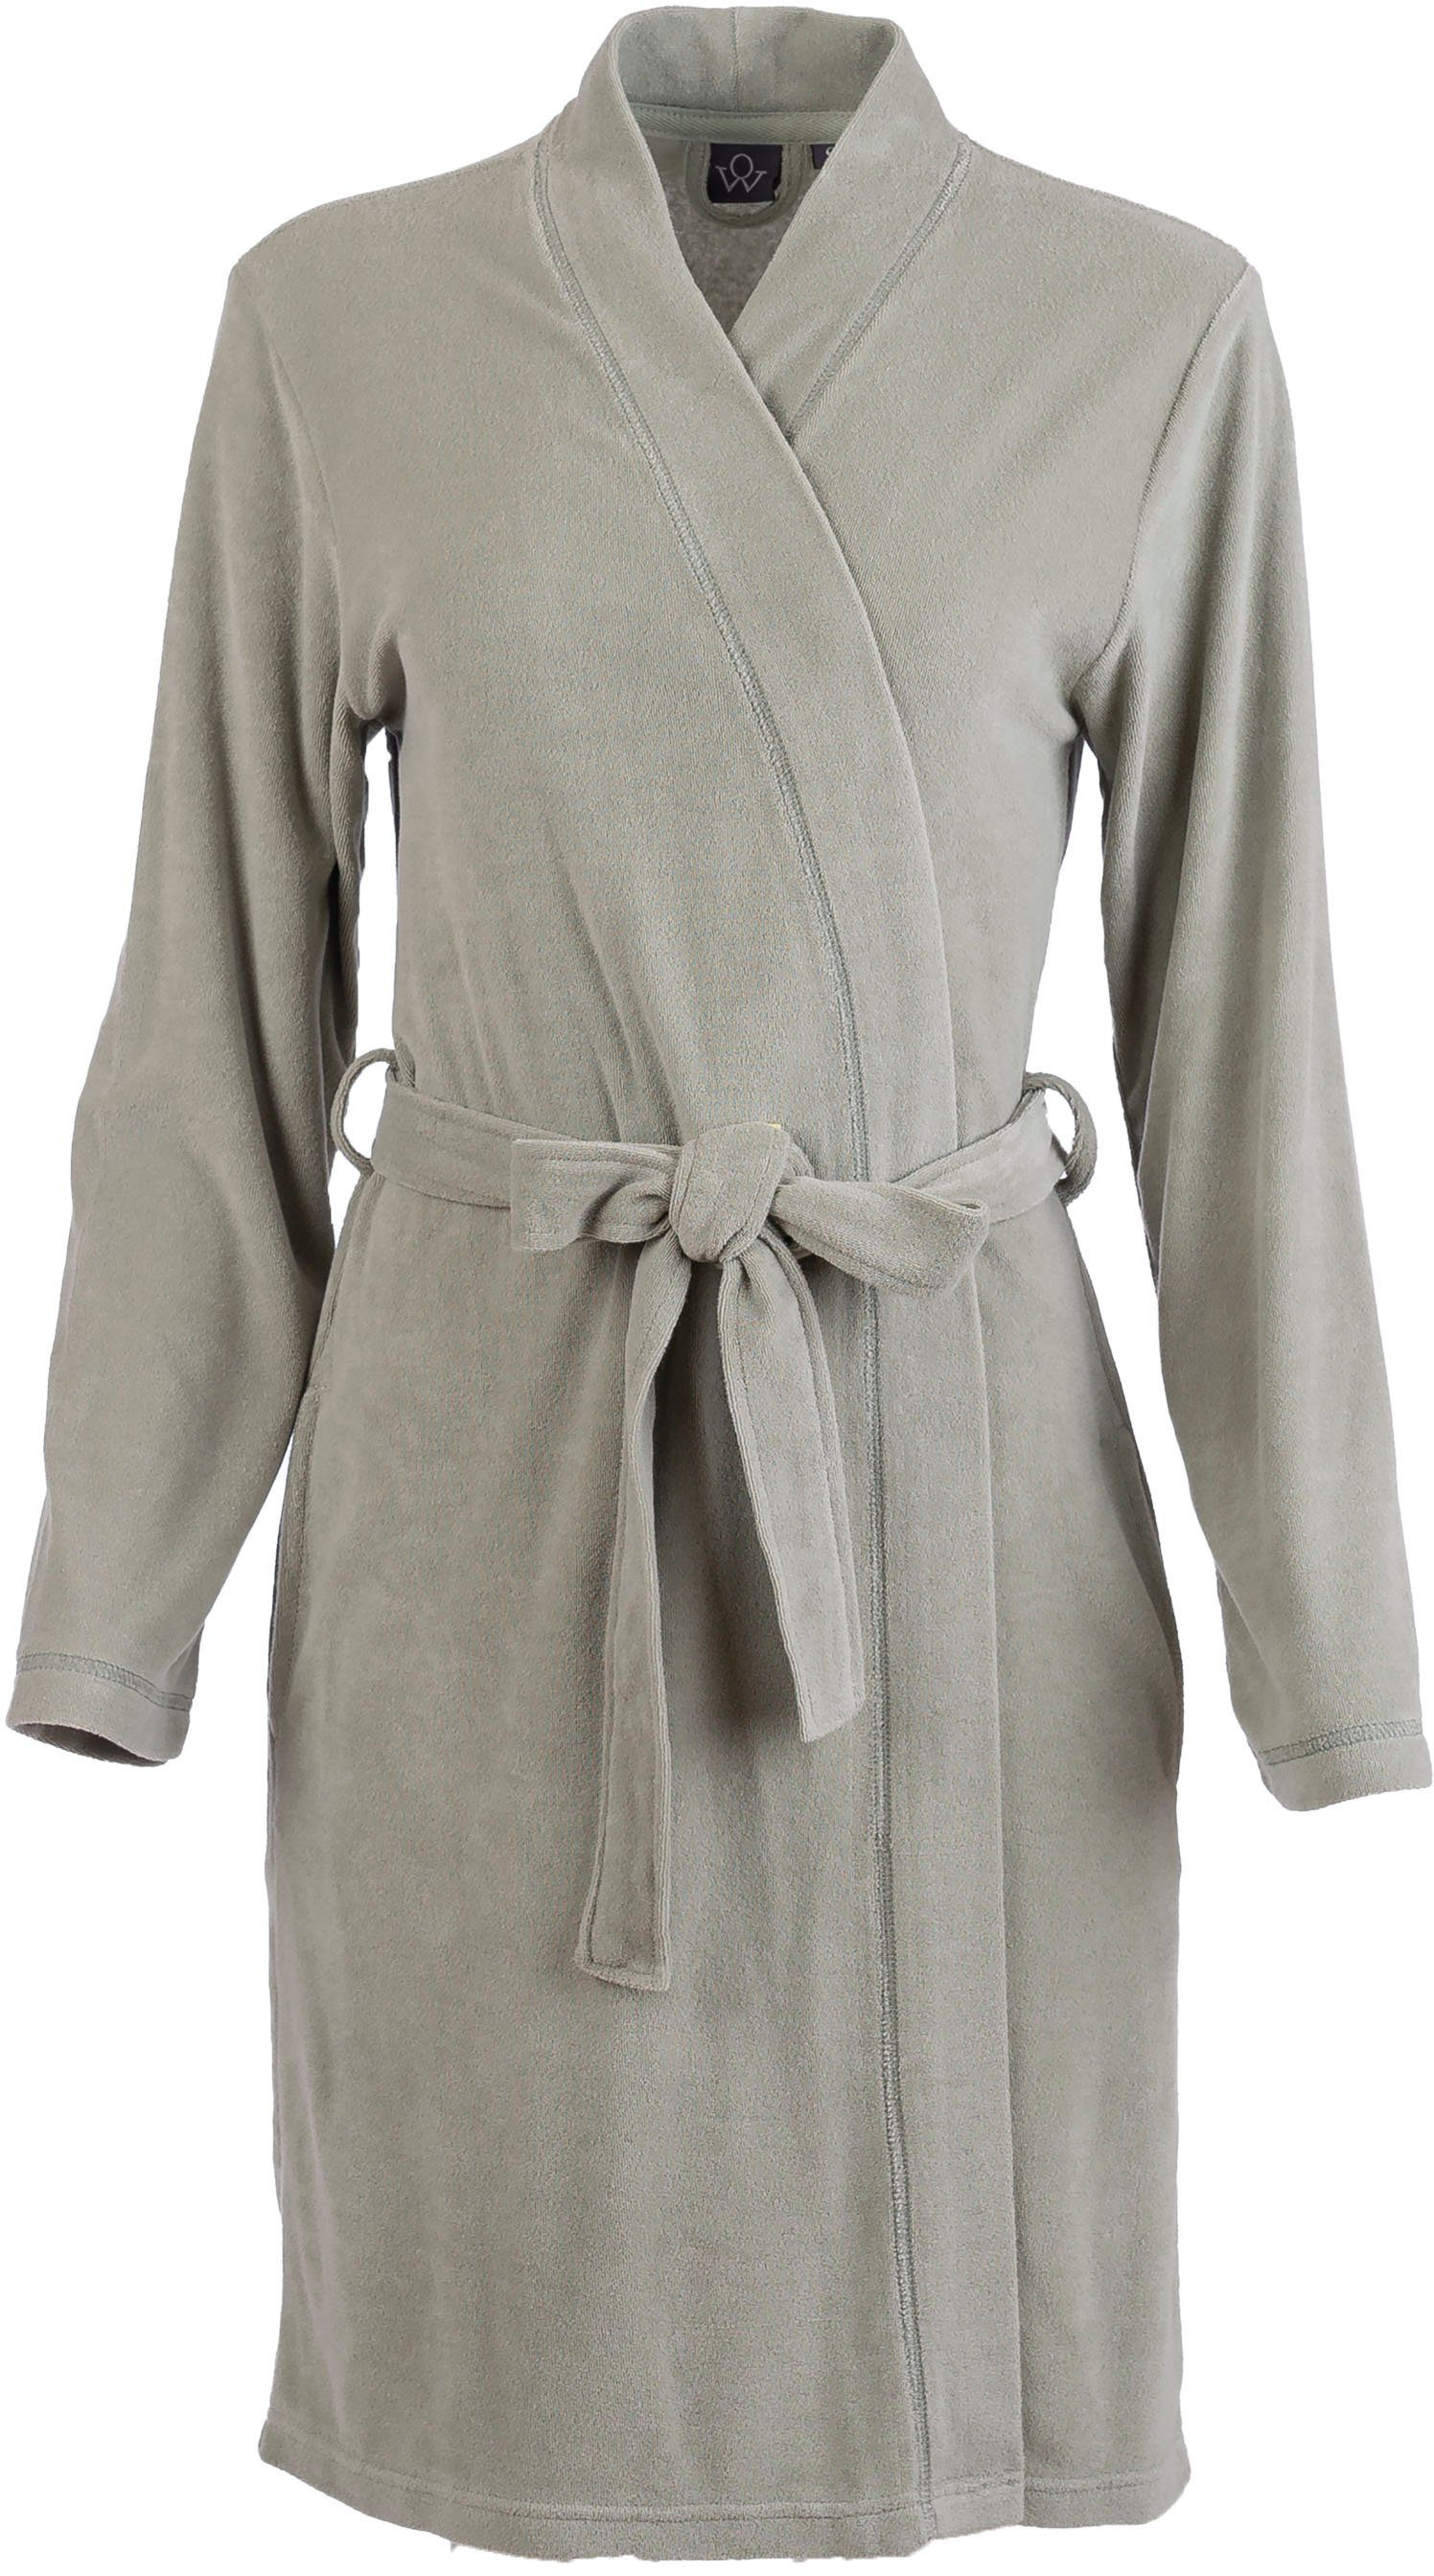 Wewo fashion Damenbademantel 035, Midilänge, Kimono Kimono-Kragen, Leichtfrottier, Gürtel, leichter